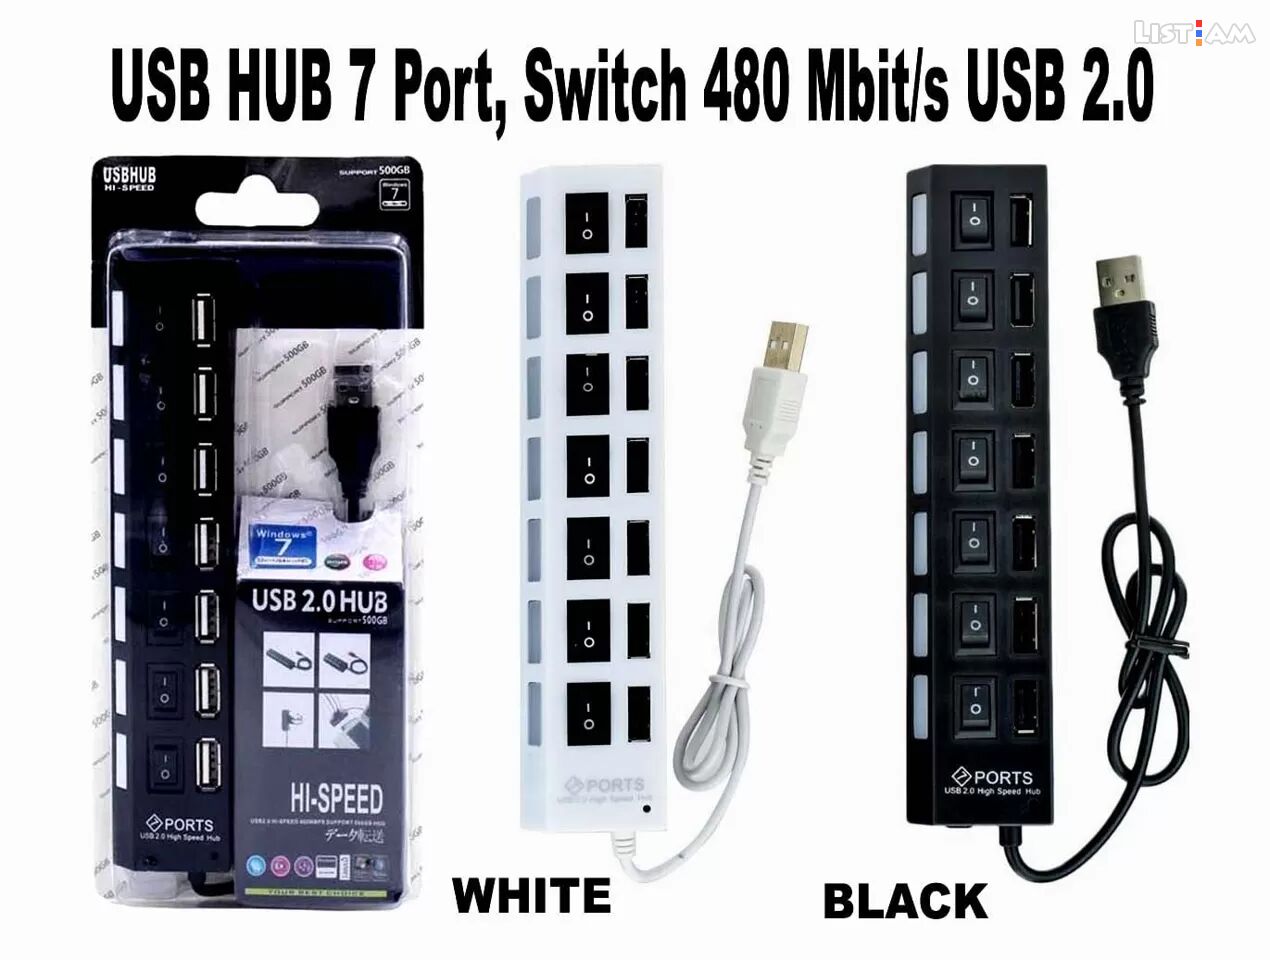 USB Hub 7 port,